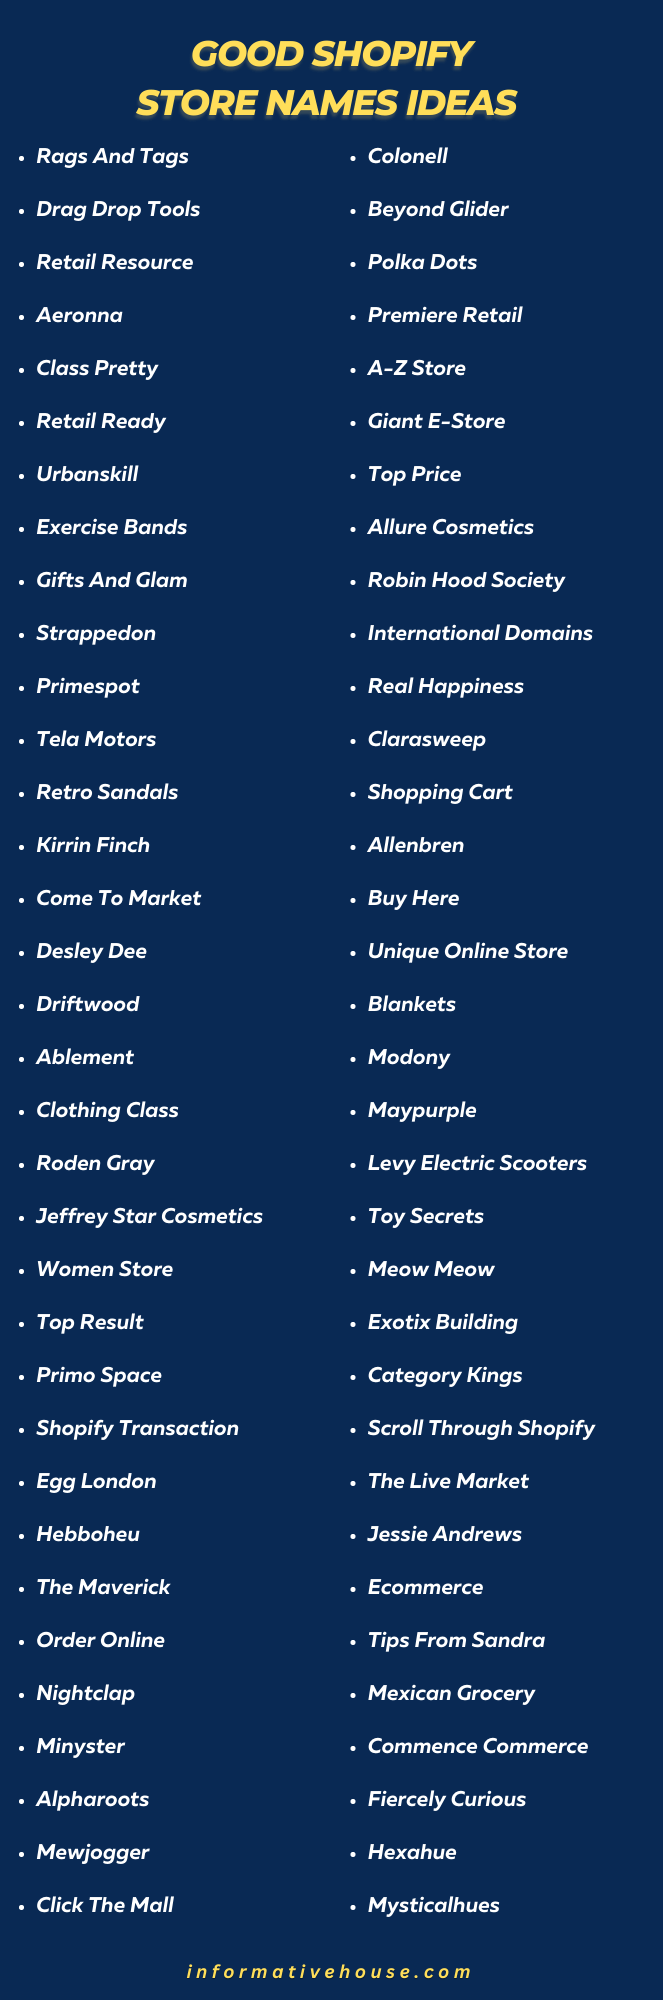 Good Shopify Store Names